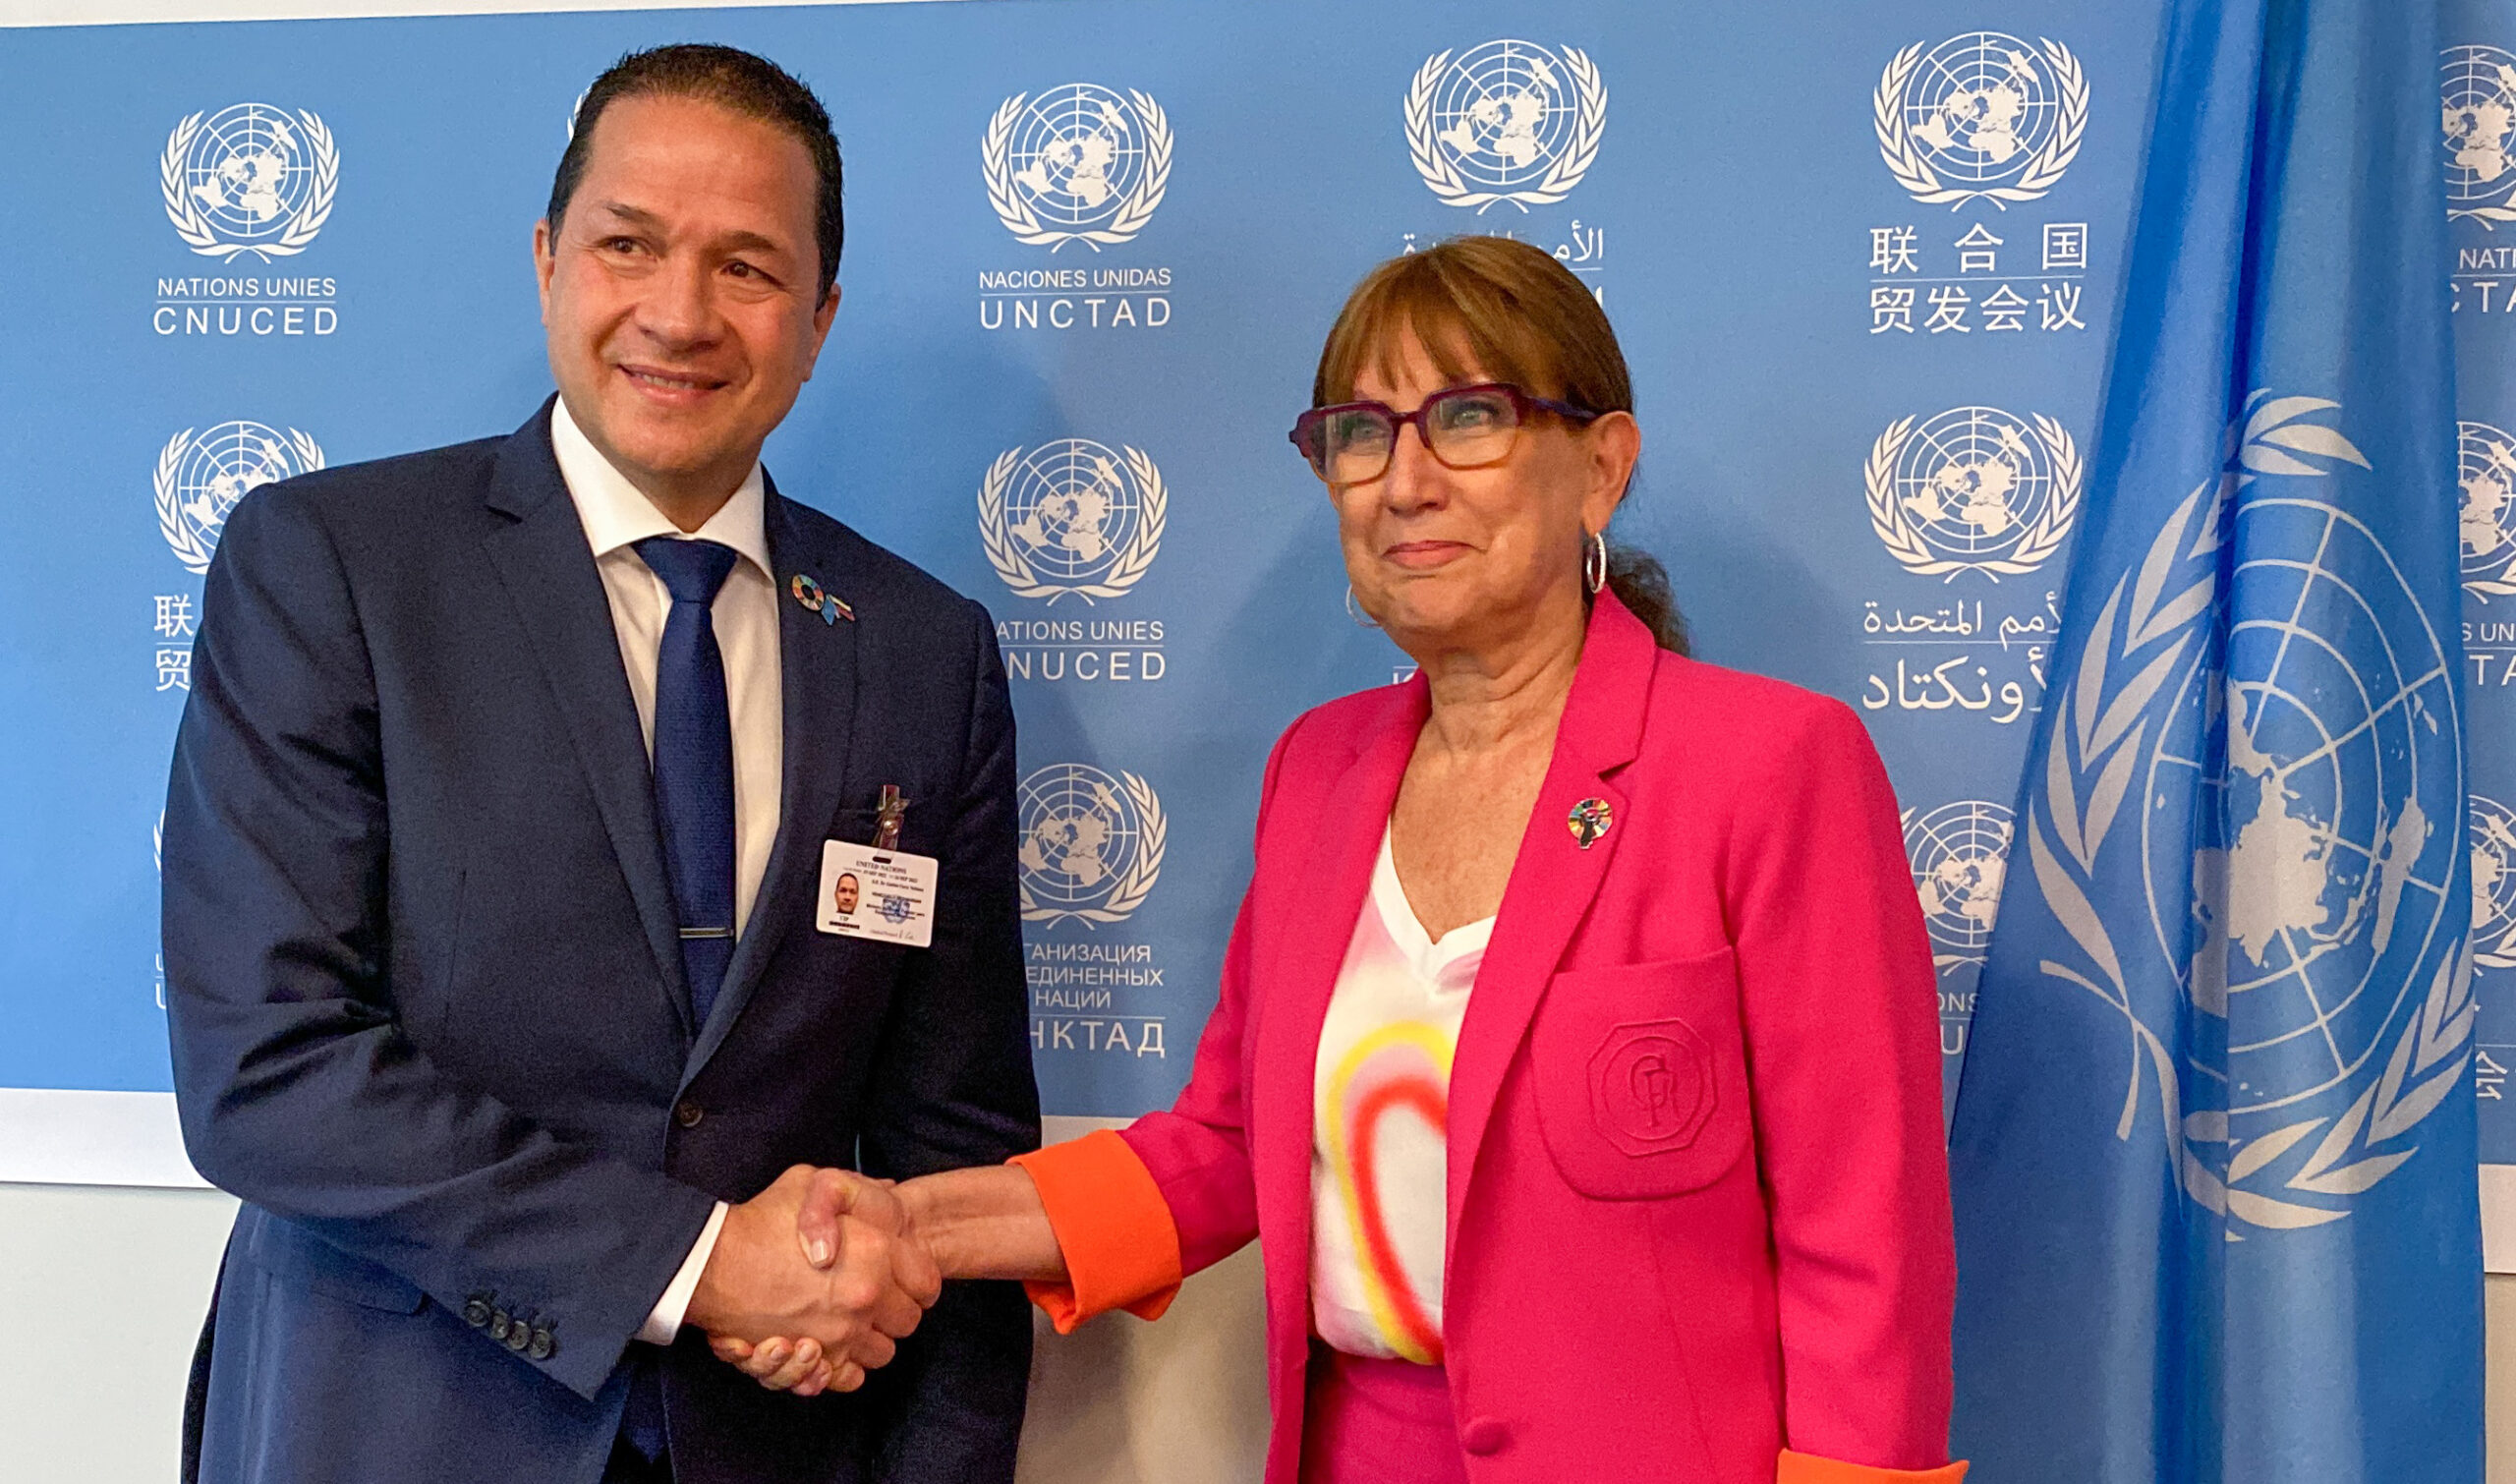 Canciller expuso ante UNCTAD aplicación de medidas coercitivas unilaterales contra Venezuela